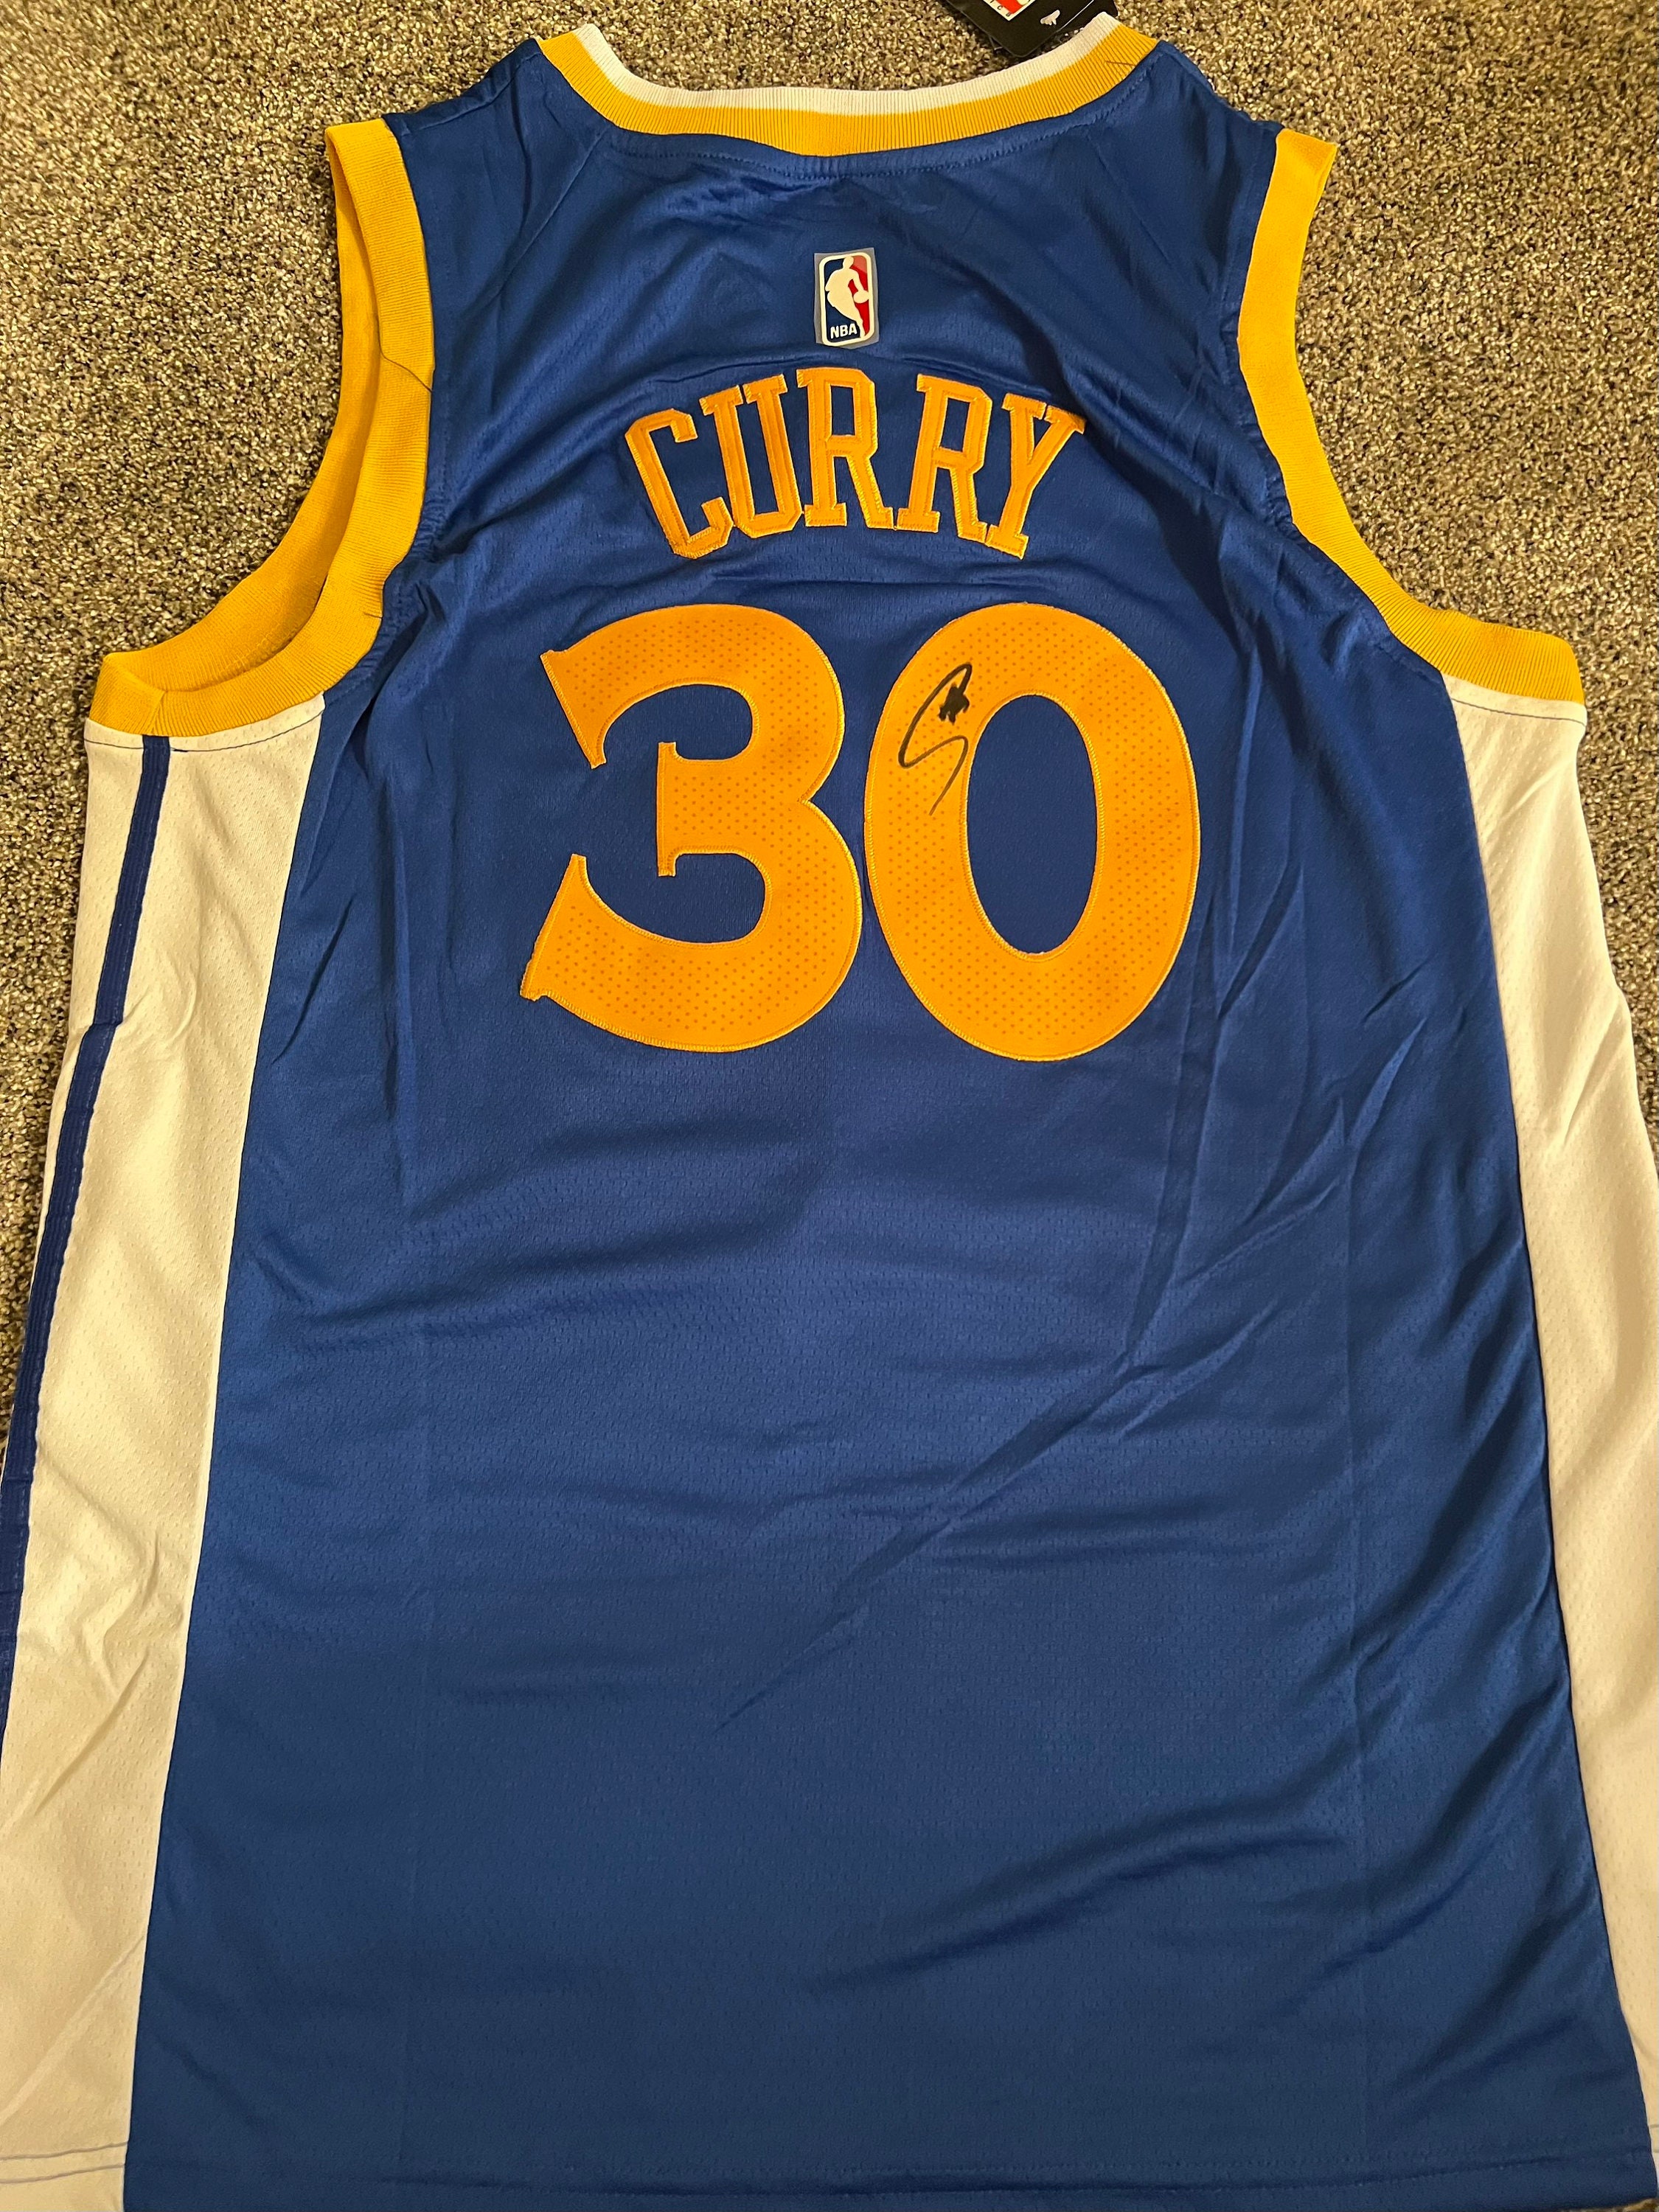 Stephen Curry Golden State Warriors Autographed Custom Basketball Jersey  W/COA